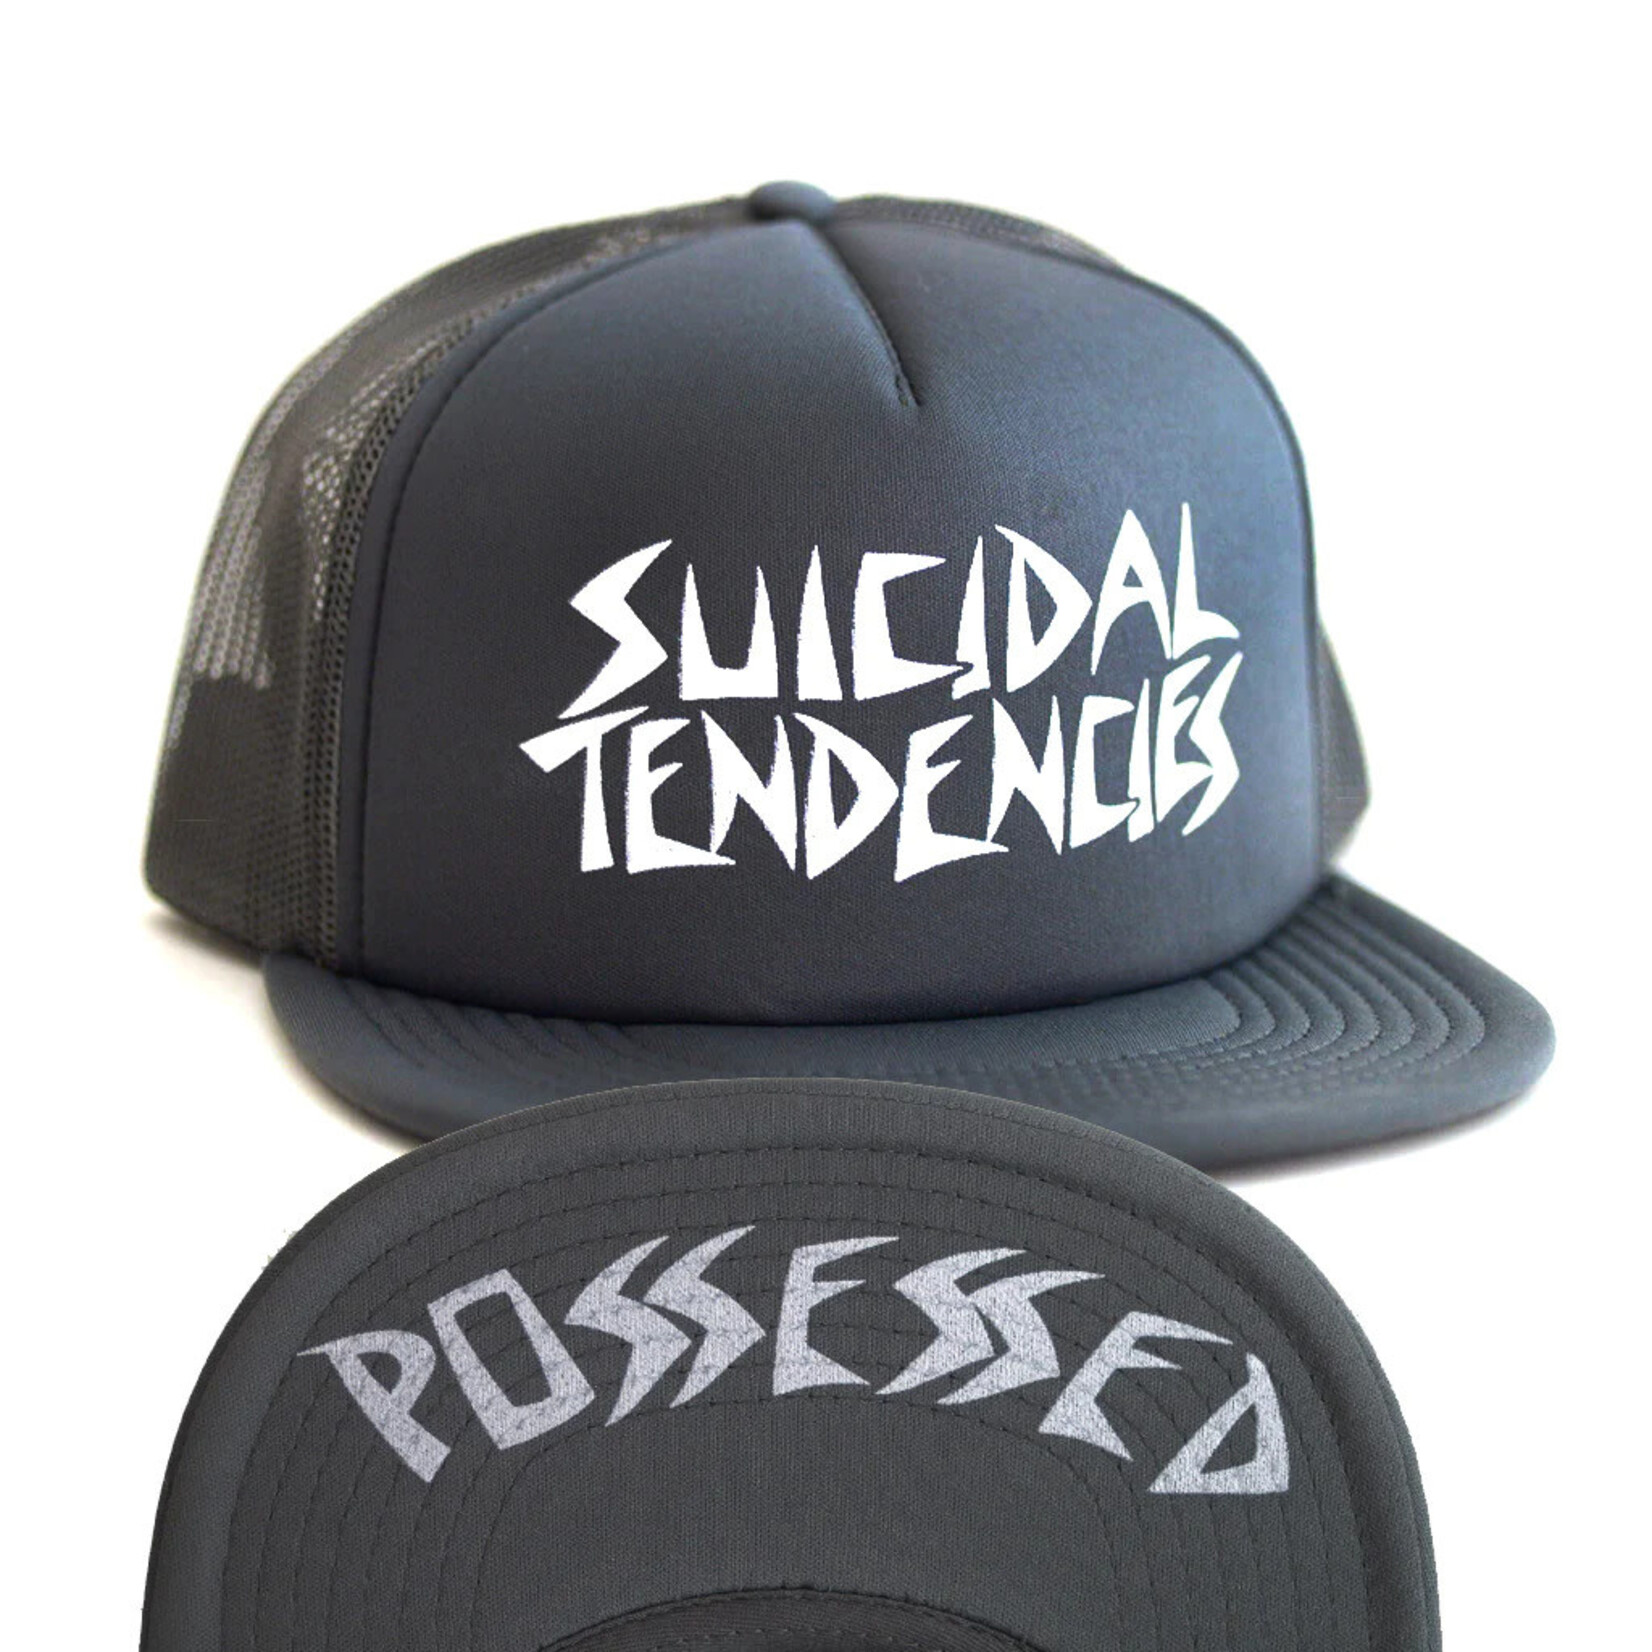 Dogtown Suicidal Tendencies ST OG/Possessed Flip Mesh Hat - Charcoal Grey